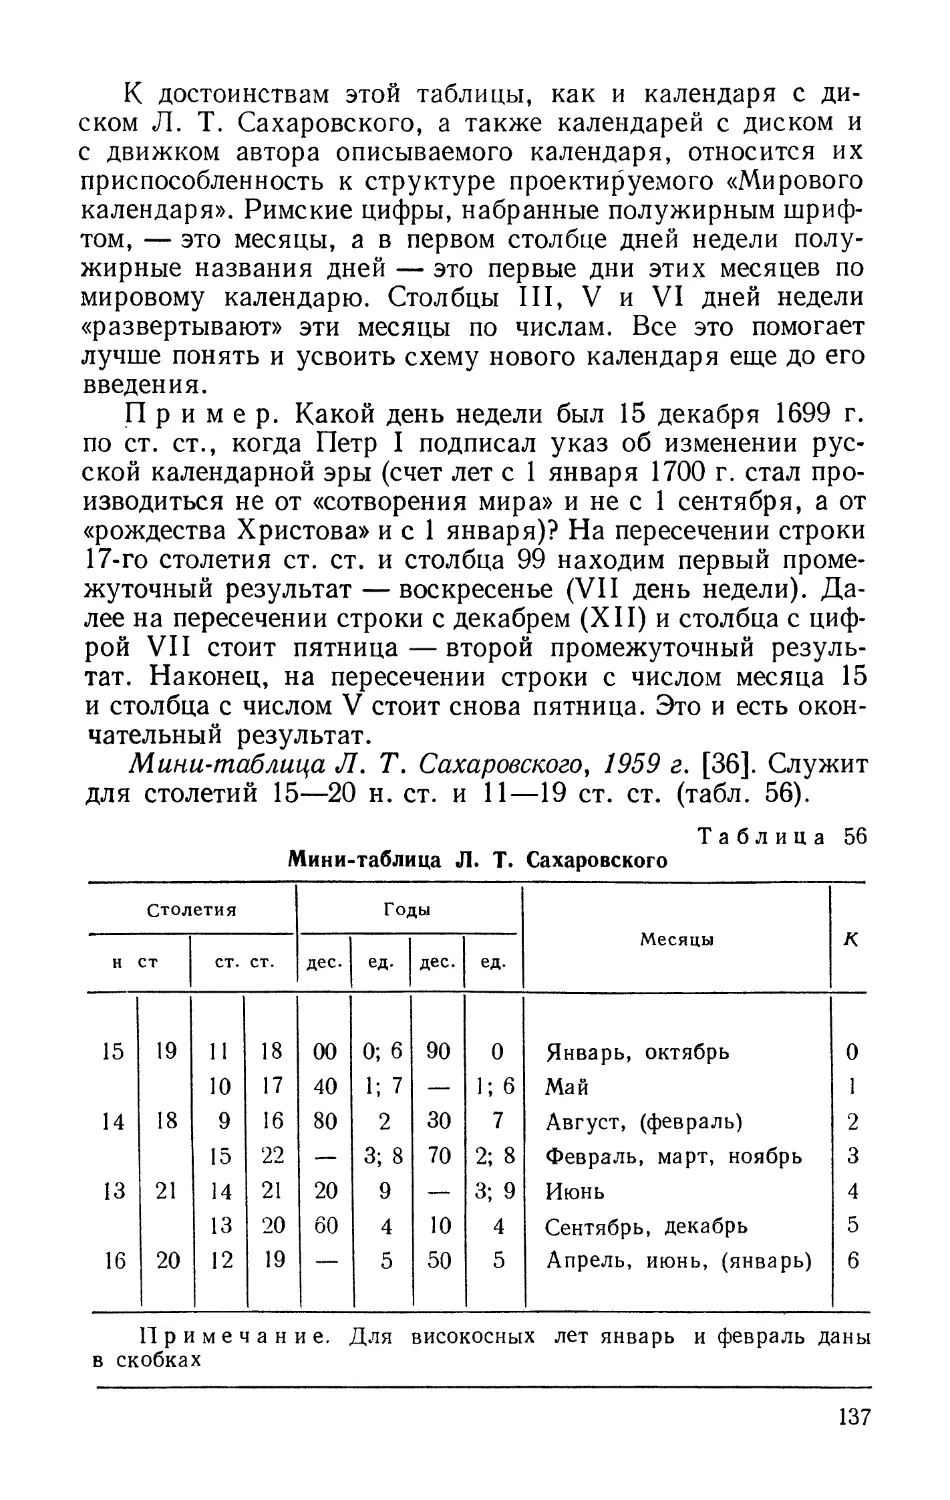 Мини-таблица Л. Т. Сахаровского, 1959 г.